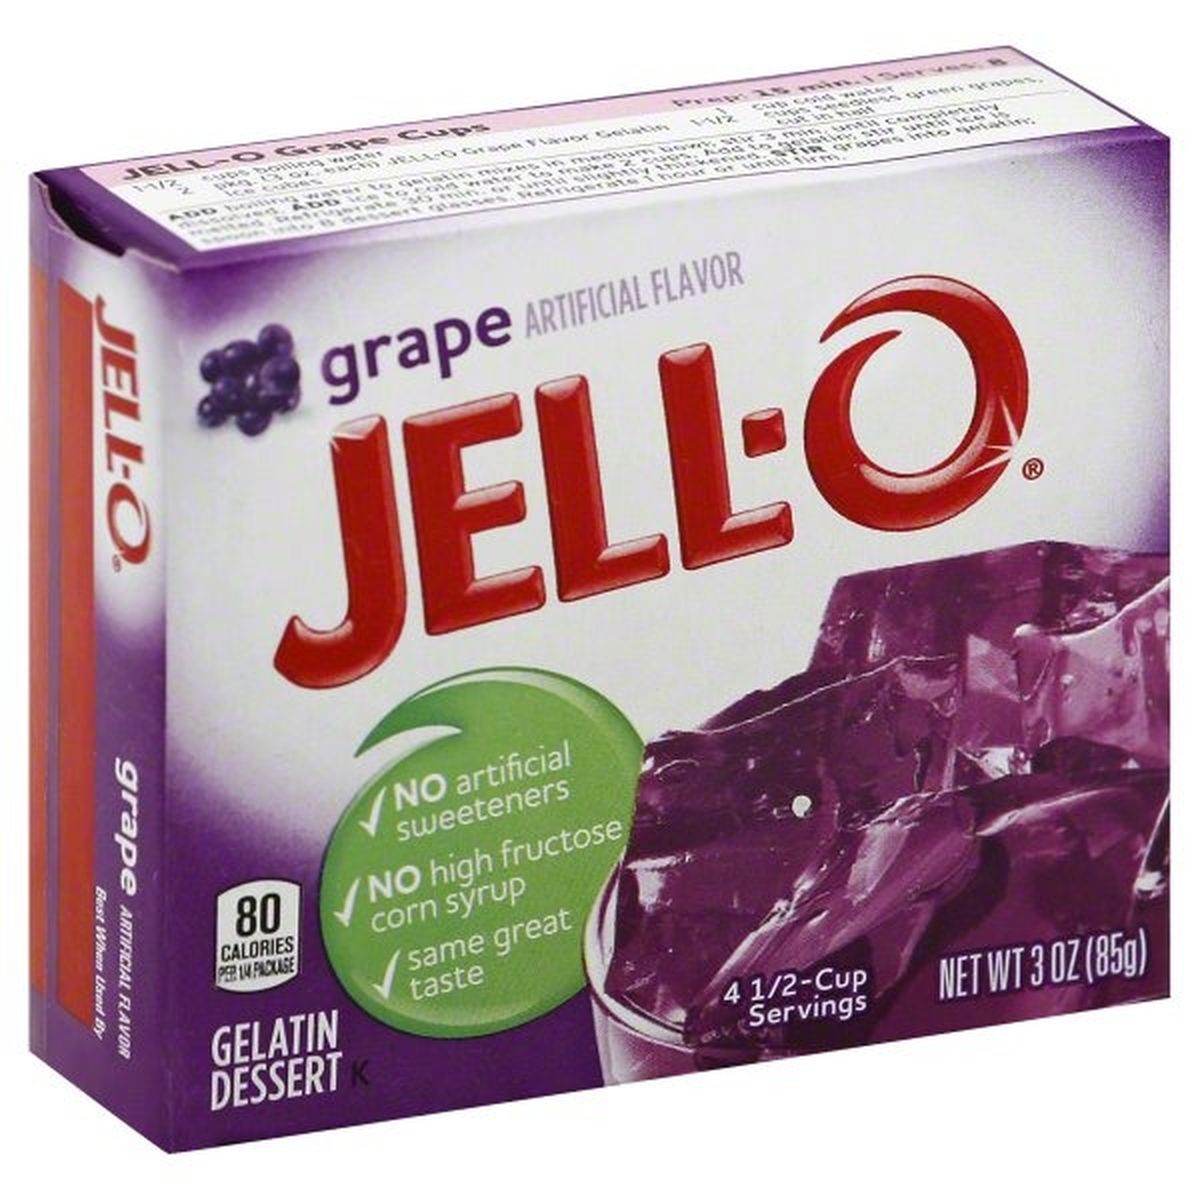 Calories in Jell-O Gelatin Dessert, Grape